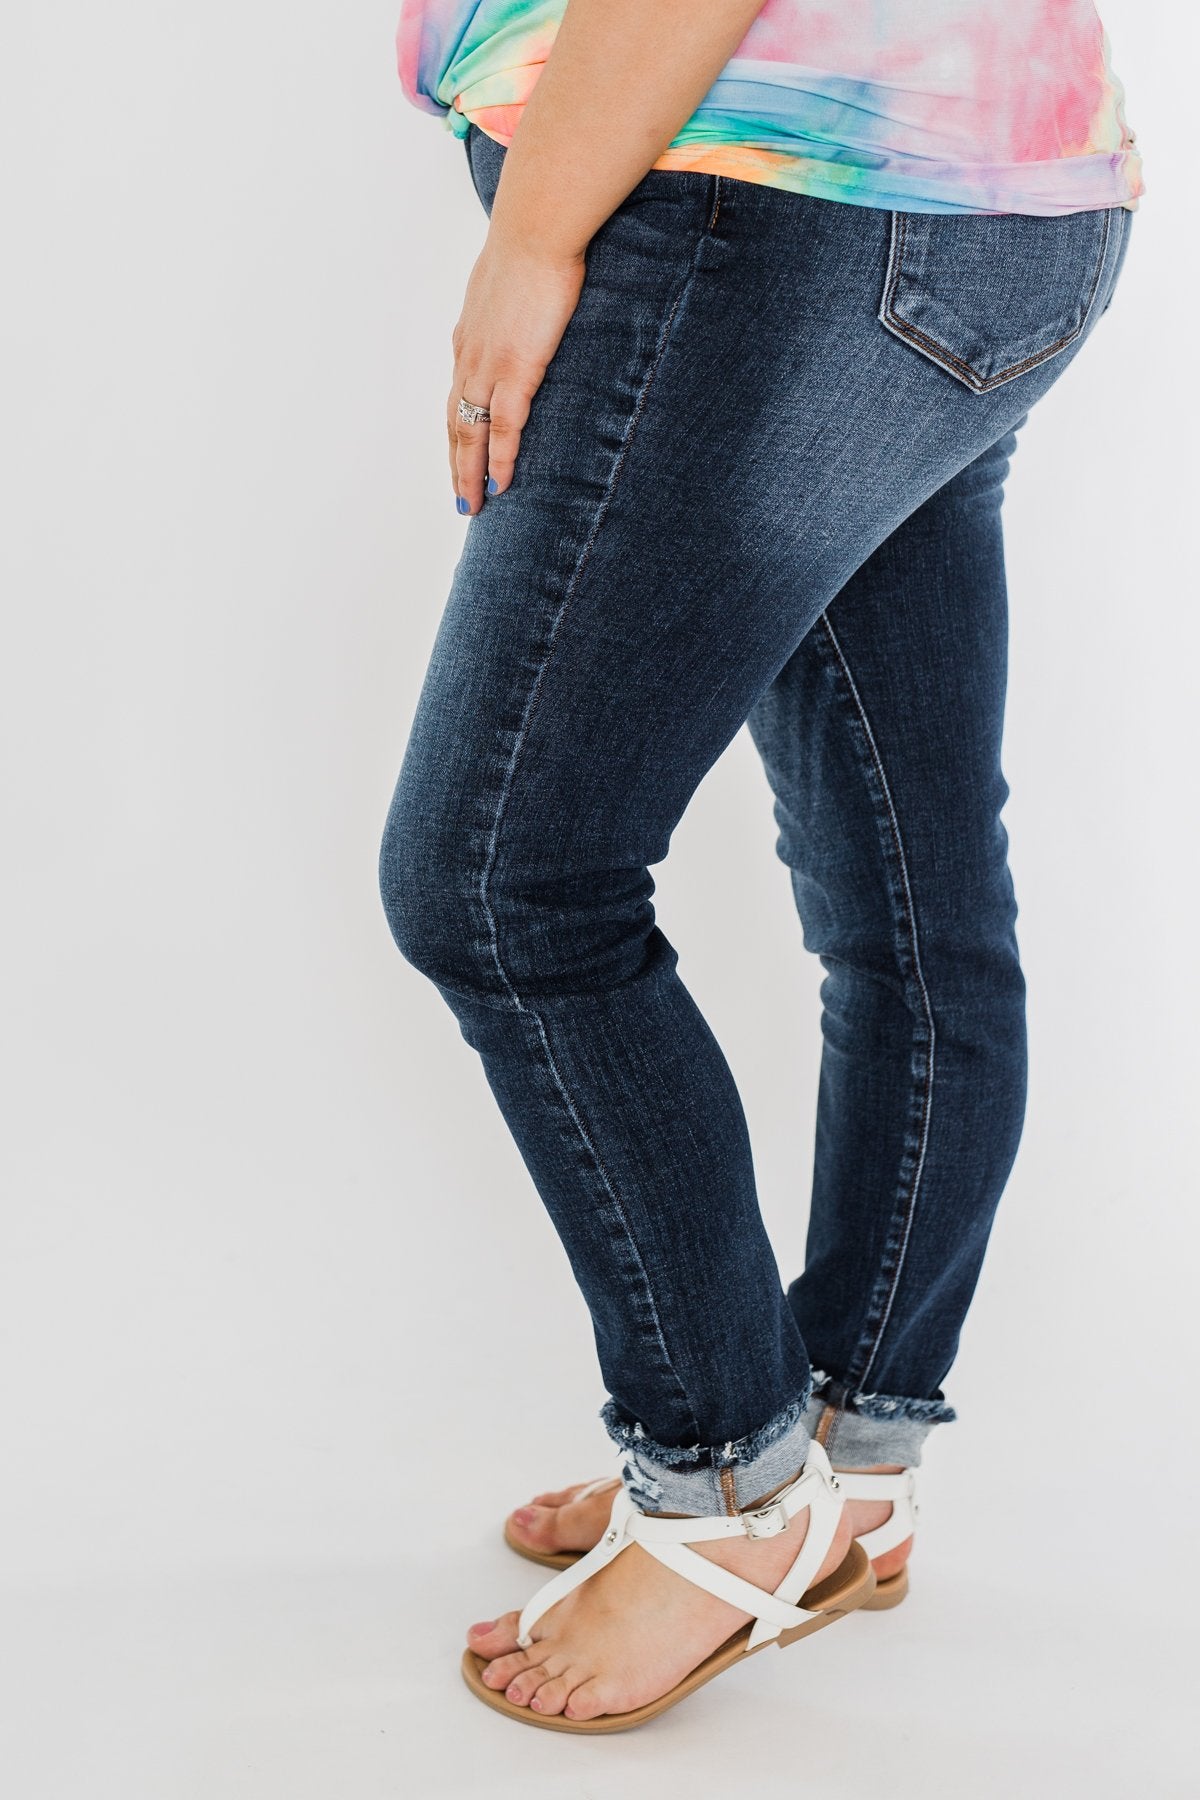 kancan casey jeans